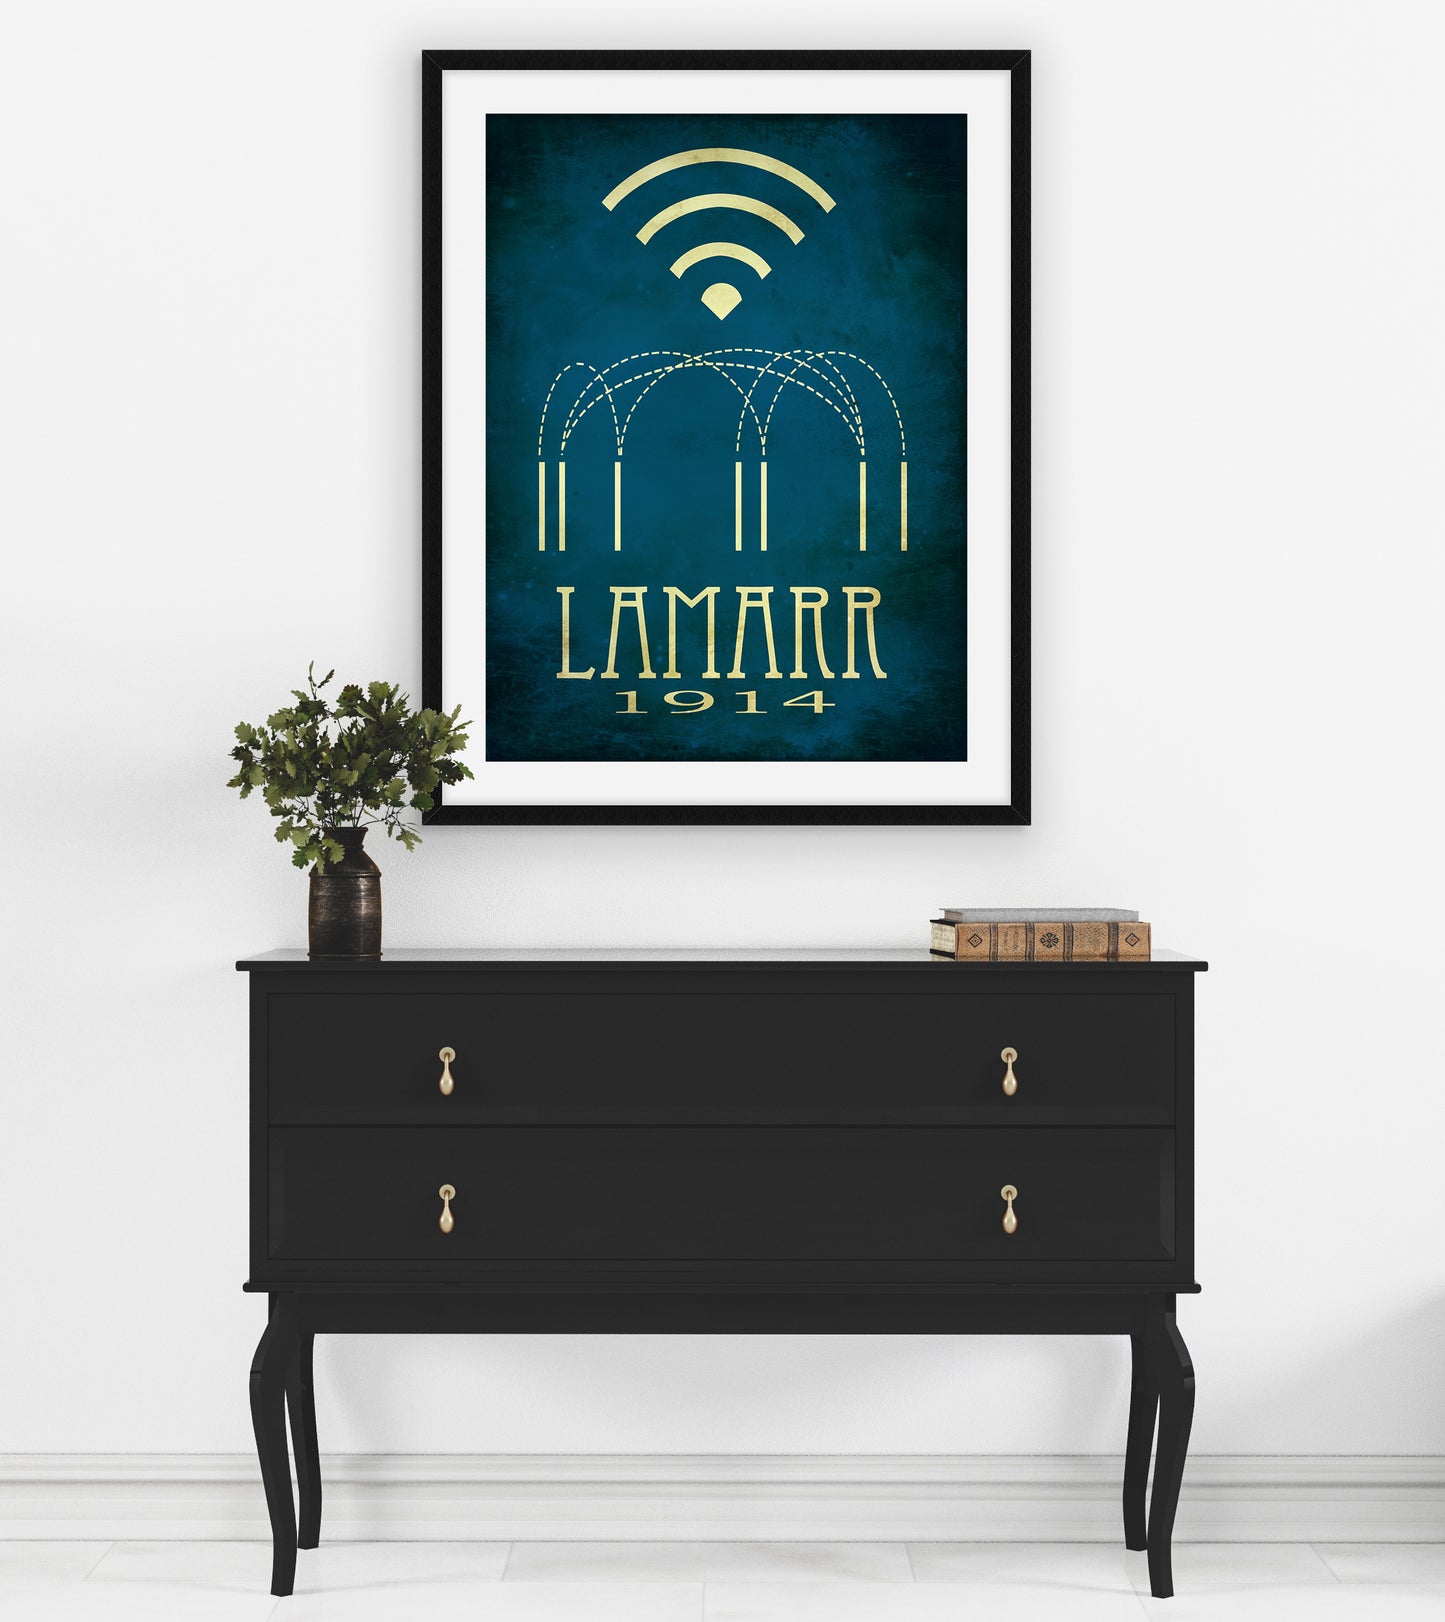 Lamarr WiFi Invention Art Print, Hedy Lamarr Inventor Decor